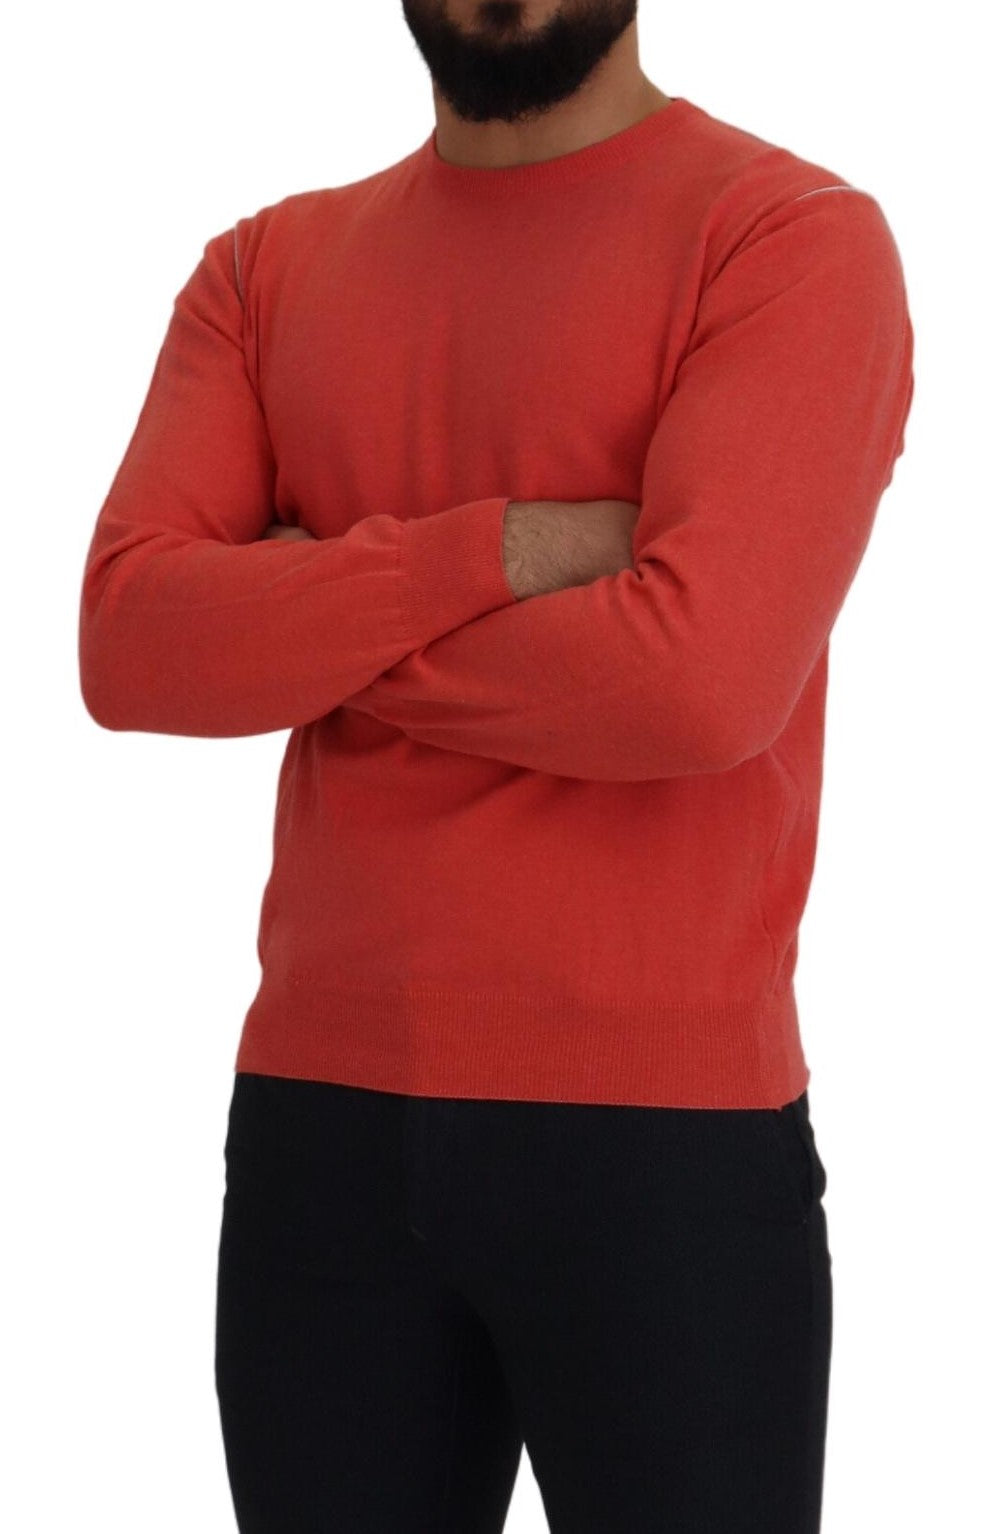 Orange Cotton Crewneck Pullover Sweatshirt Sweater